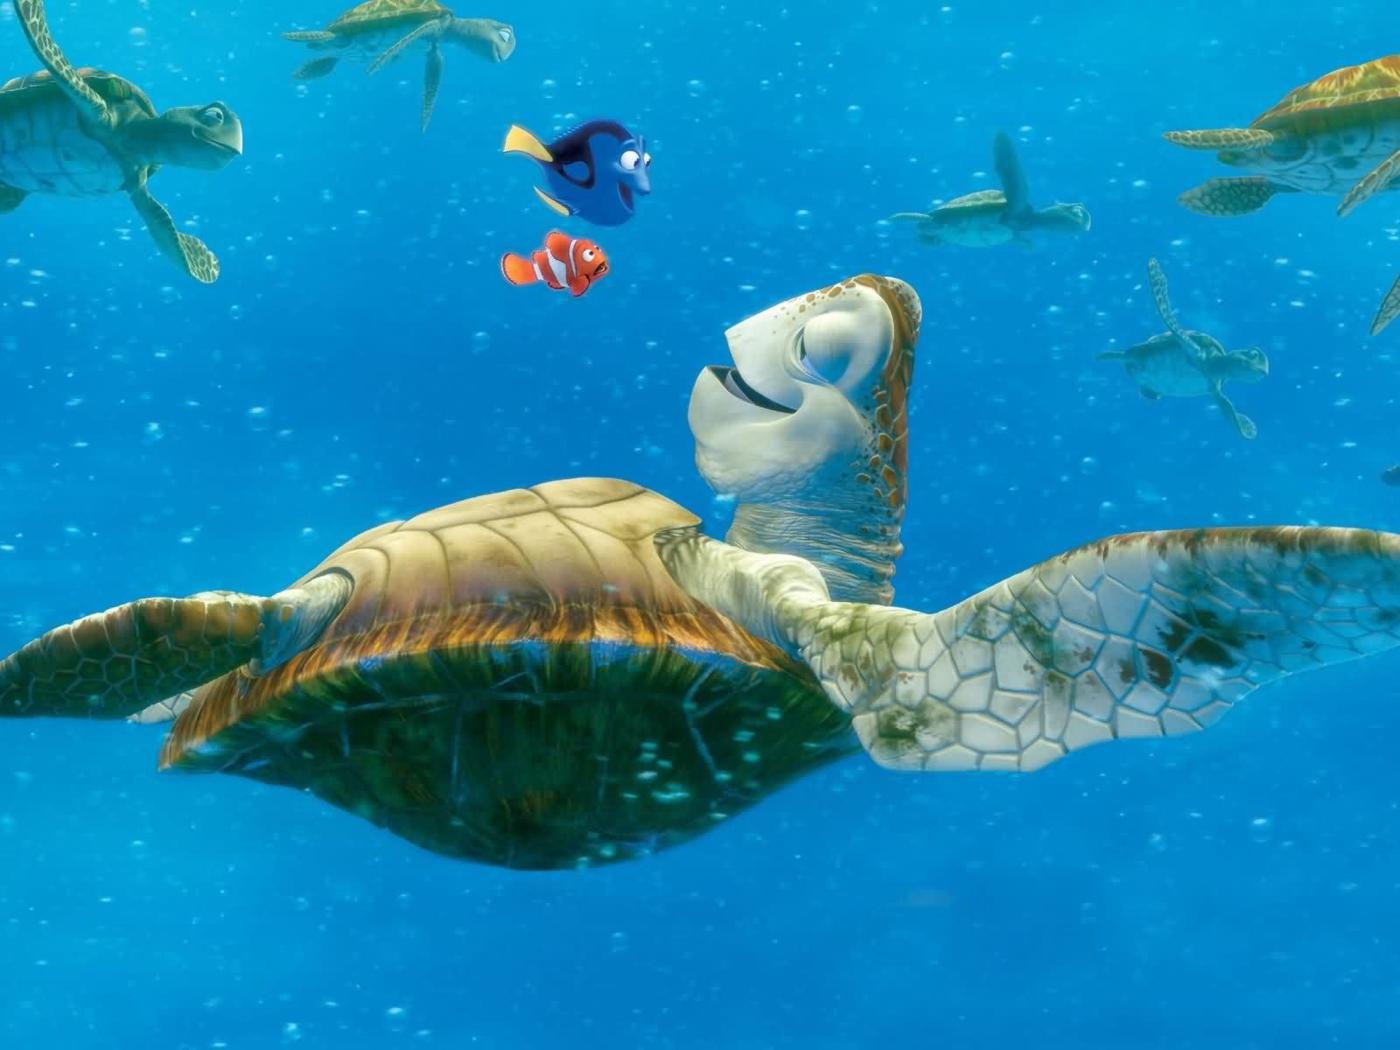 PC-Wallpapers - Free Finding Nemo Movie Desktop Wallpaper Backgrounds